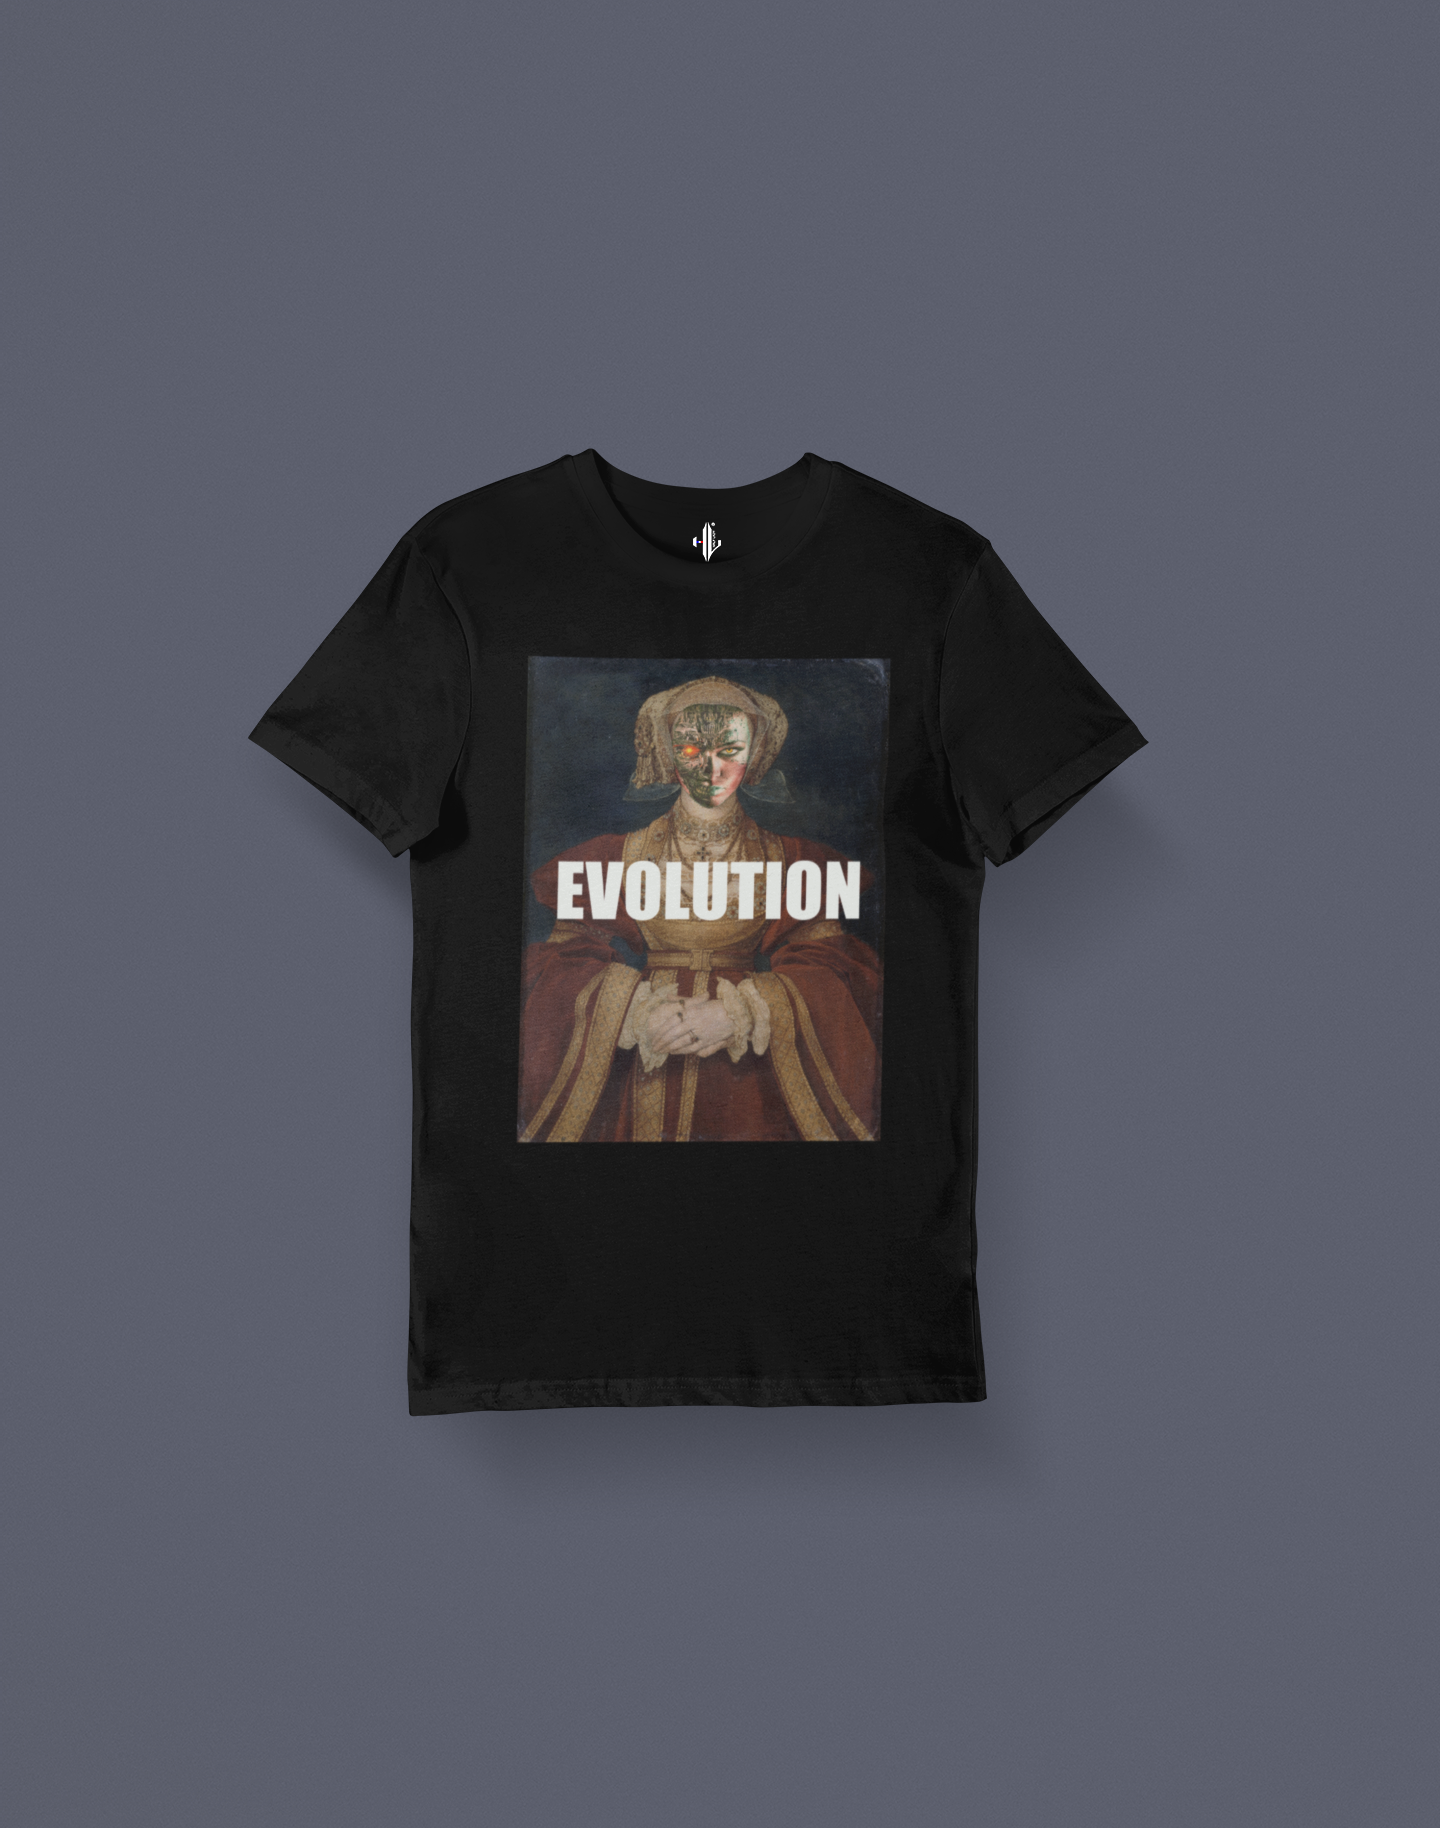 T-shirt "EVOLUTION"